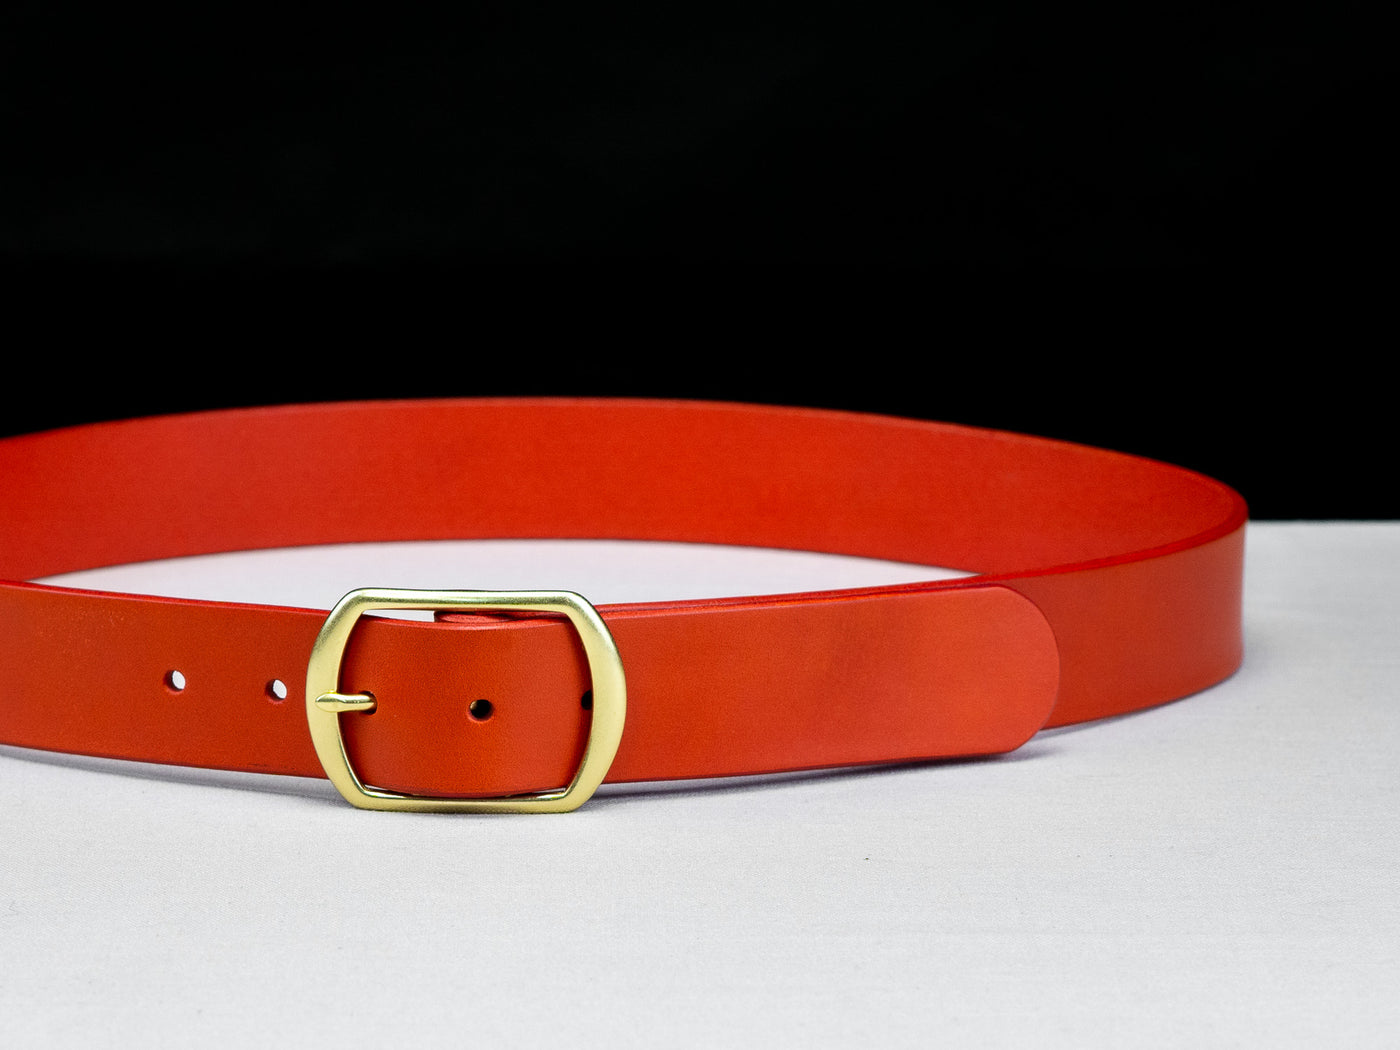 Leather Belt Symmetria ~ Red Belt with Centre-bar Buckle - Atlas Leathercraft - Handmade Australian Leather Goods